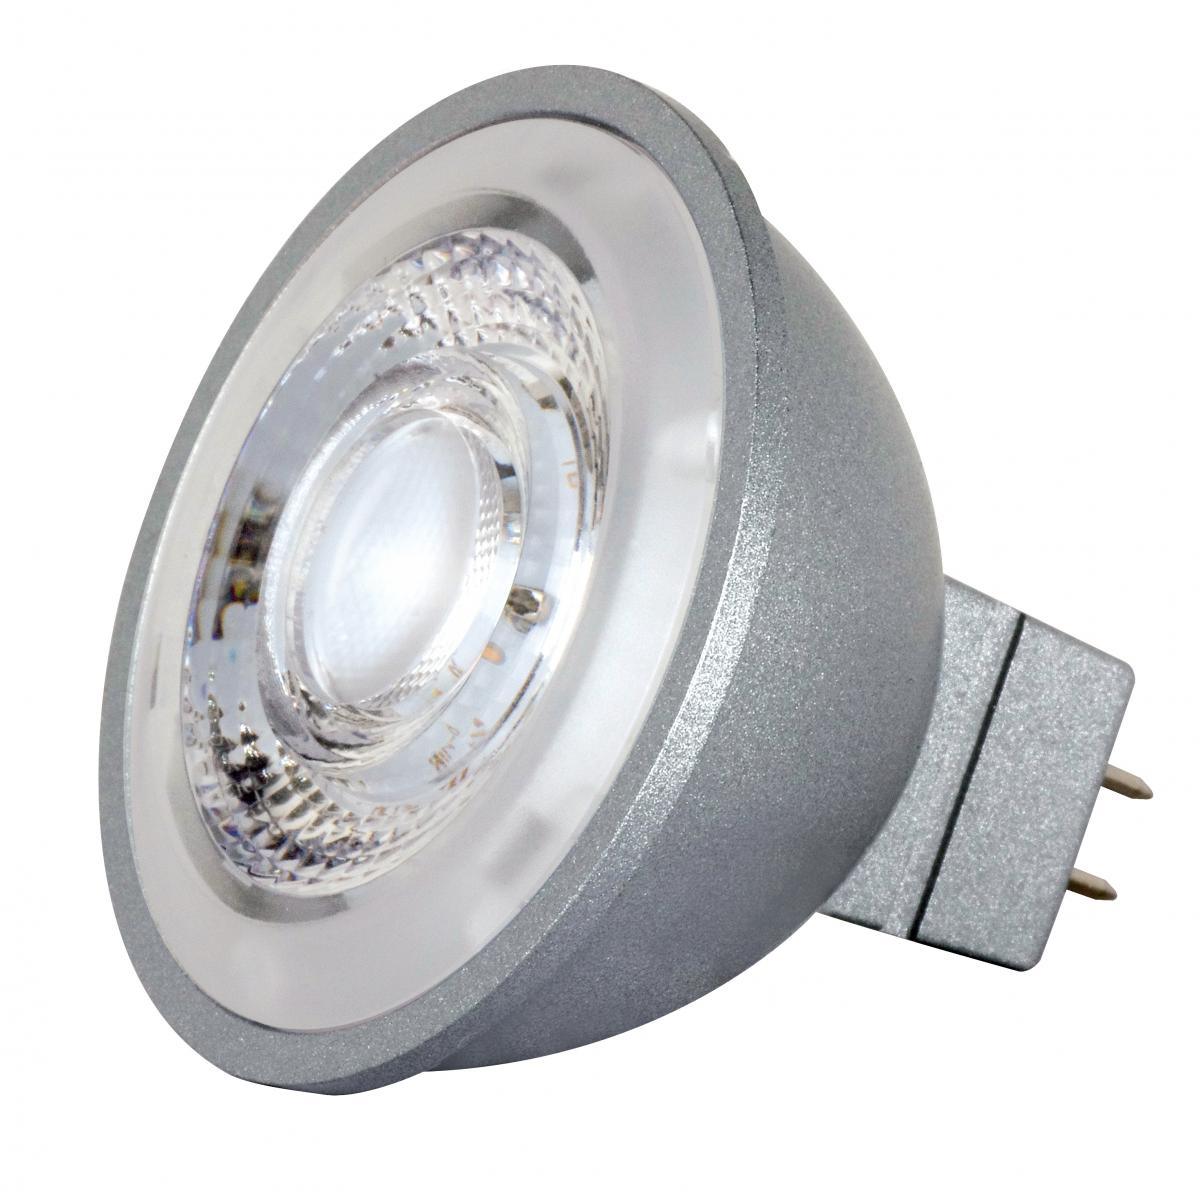 MR16 Reflector LED bulb, 8 watt, 490 Lumens, 2700K, GU5.3 Base, 40 Deg. Flood